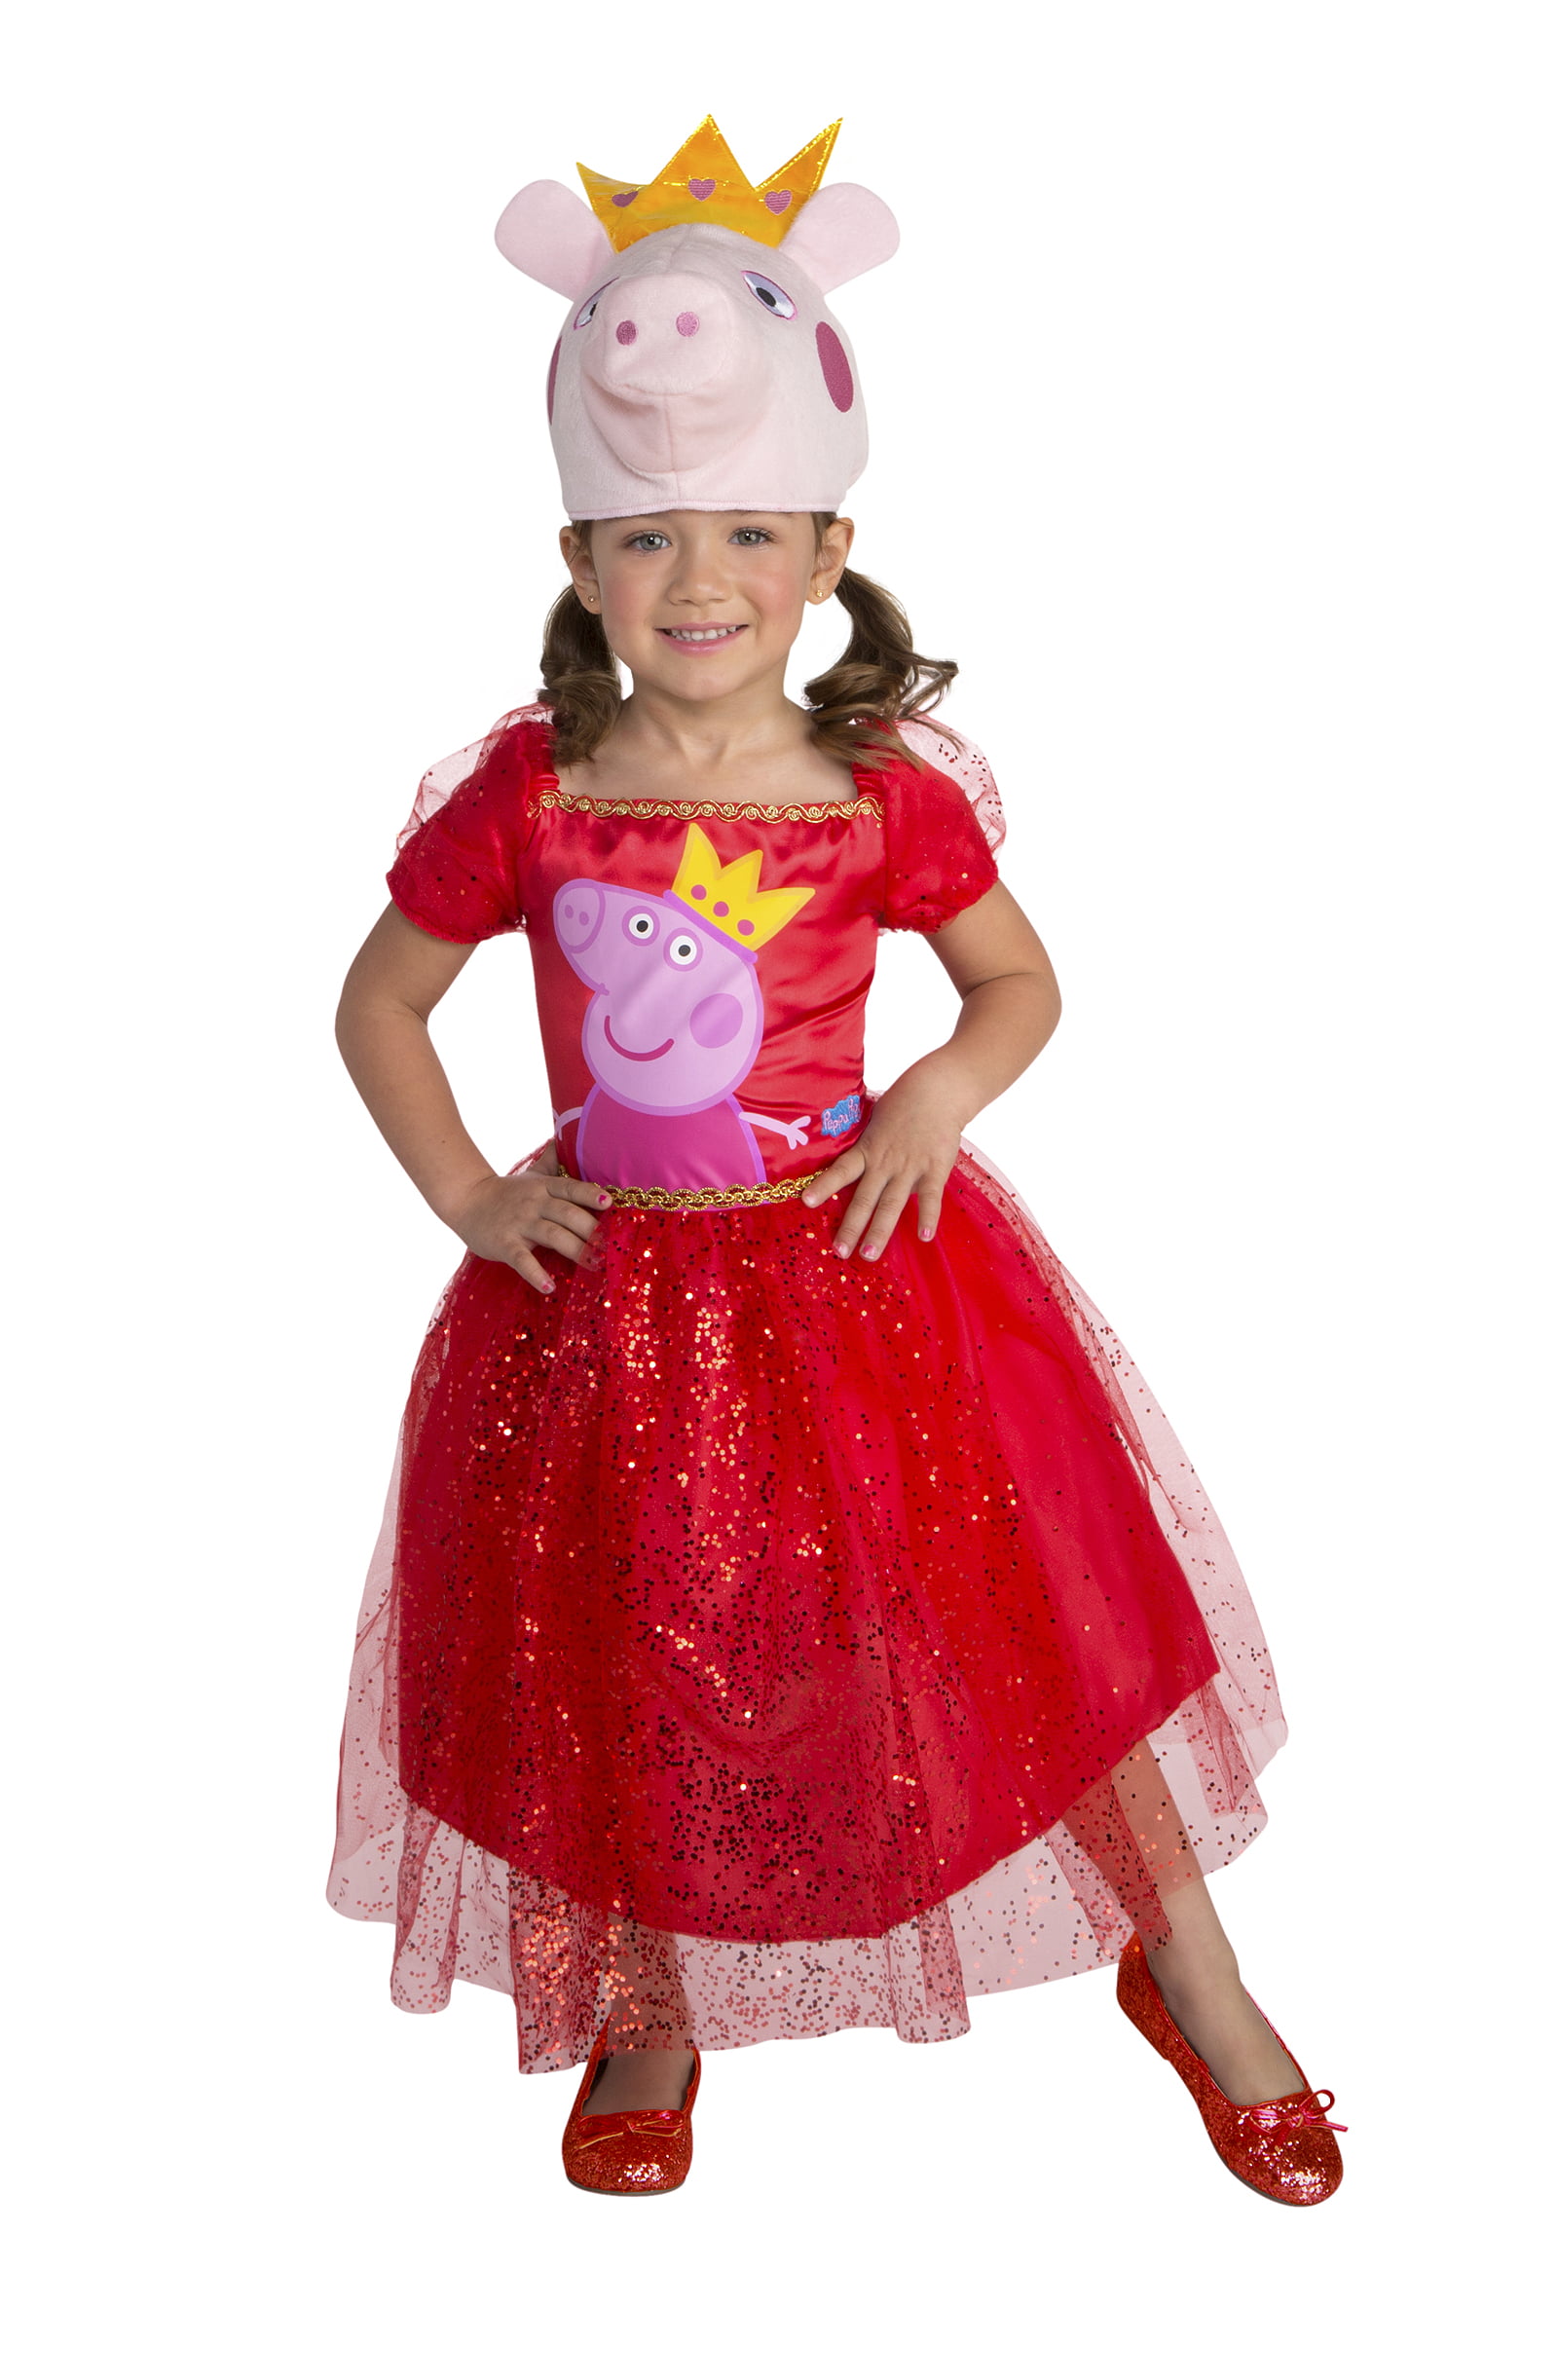 Peppa Pig Princess Tutu Costume Dress 1896 Size 3T-4T - Walmart.com ...